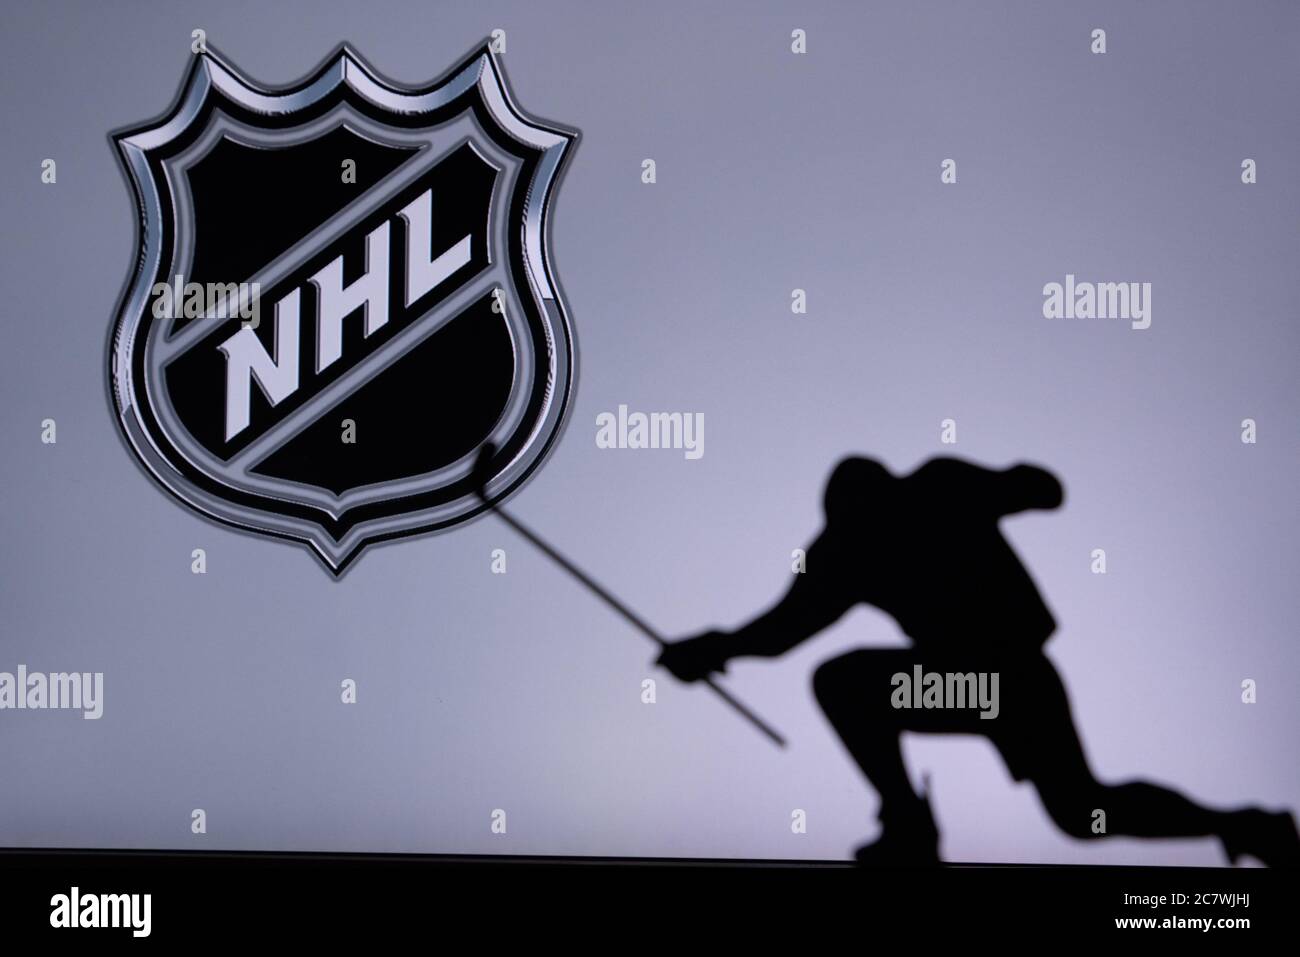 TORONTO, KANADA, 17. JULI: National Hockey League Logo. Professionelle NHL-Eishockey-Spieler feiern Tor. Silhouette Foto, Bearbeiten Raum Stockfoto